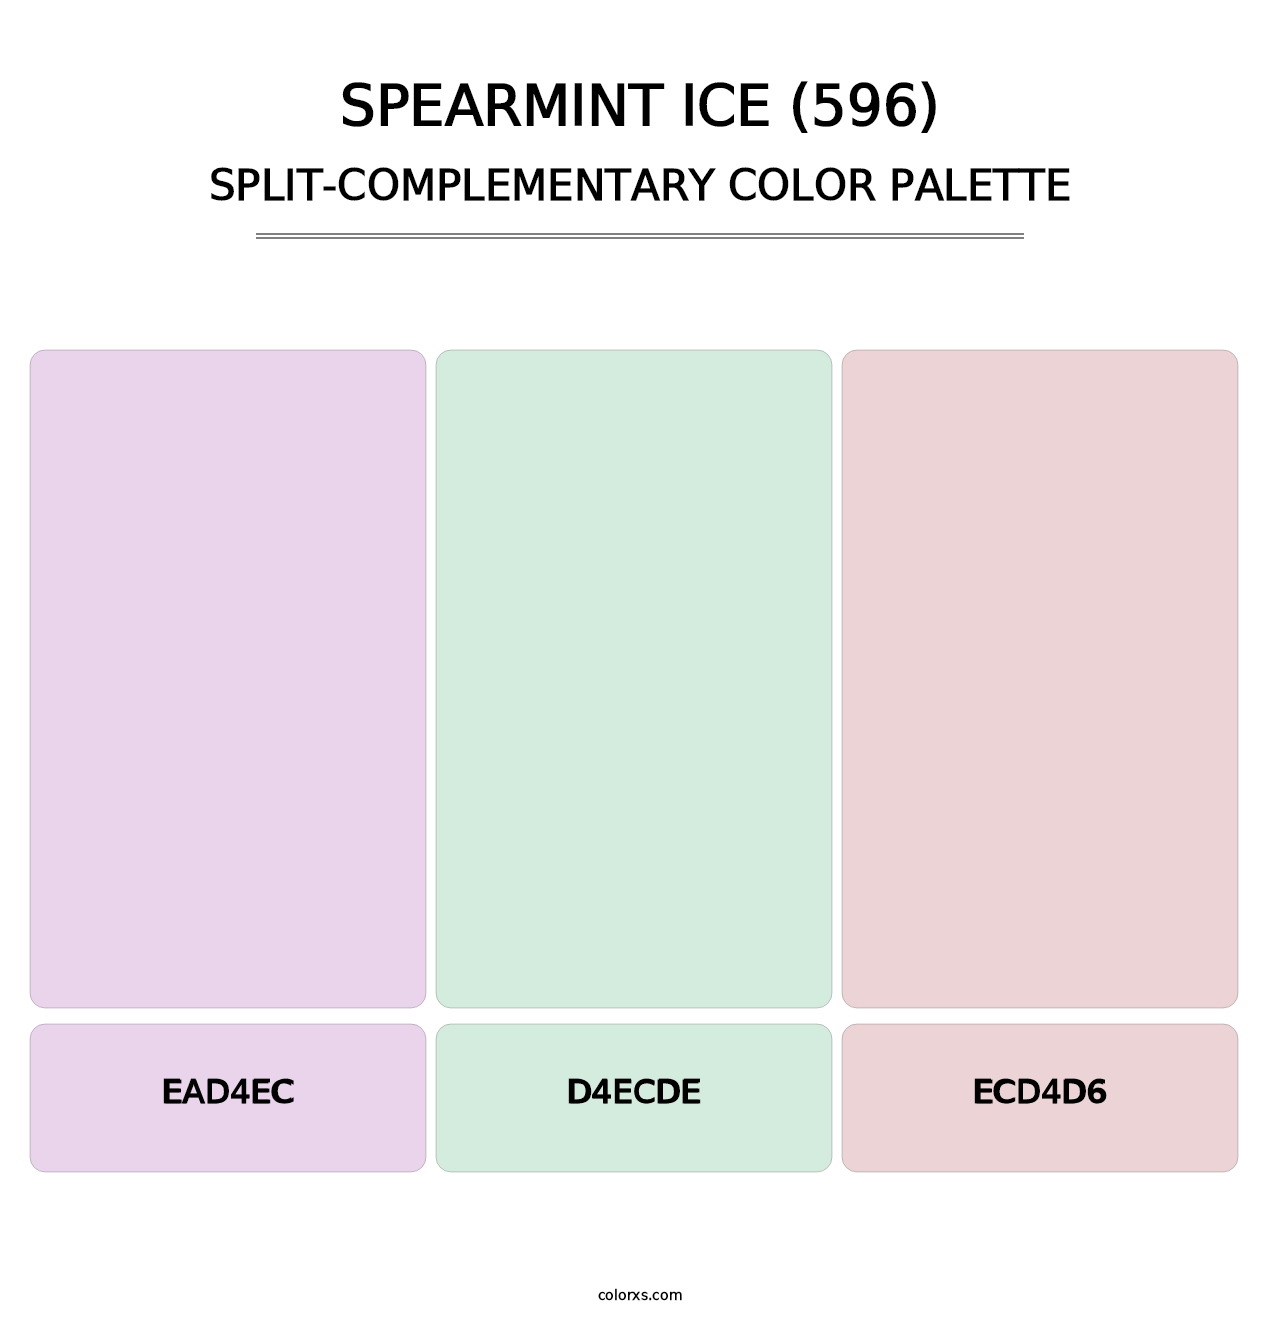 Spearmint Ice (596) - Split-Complementary Color Palette